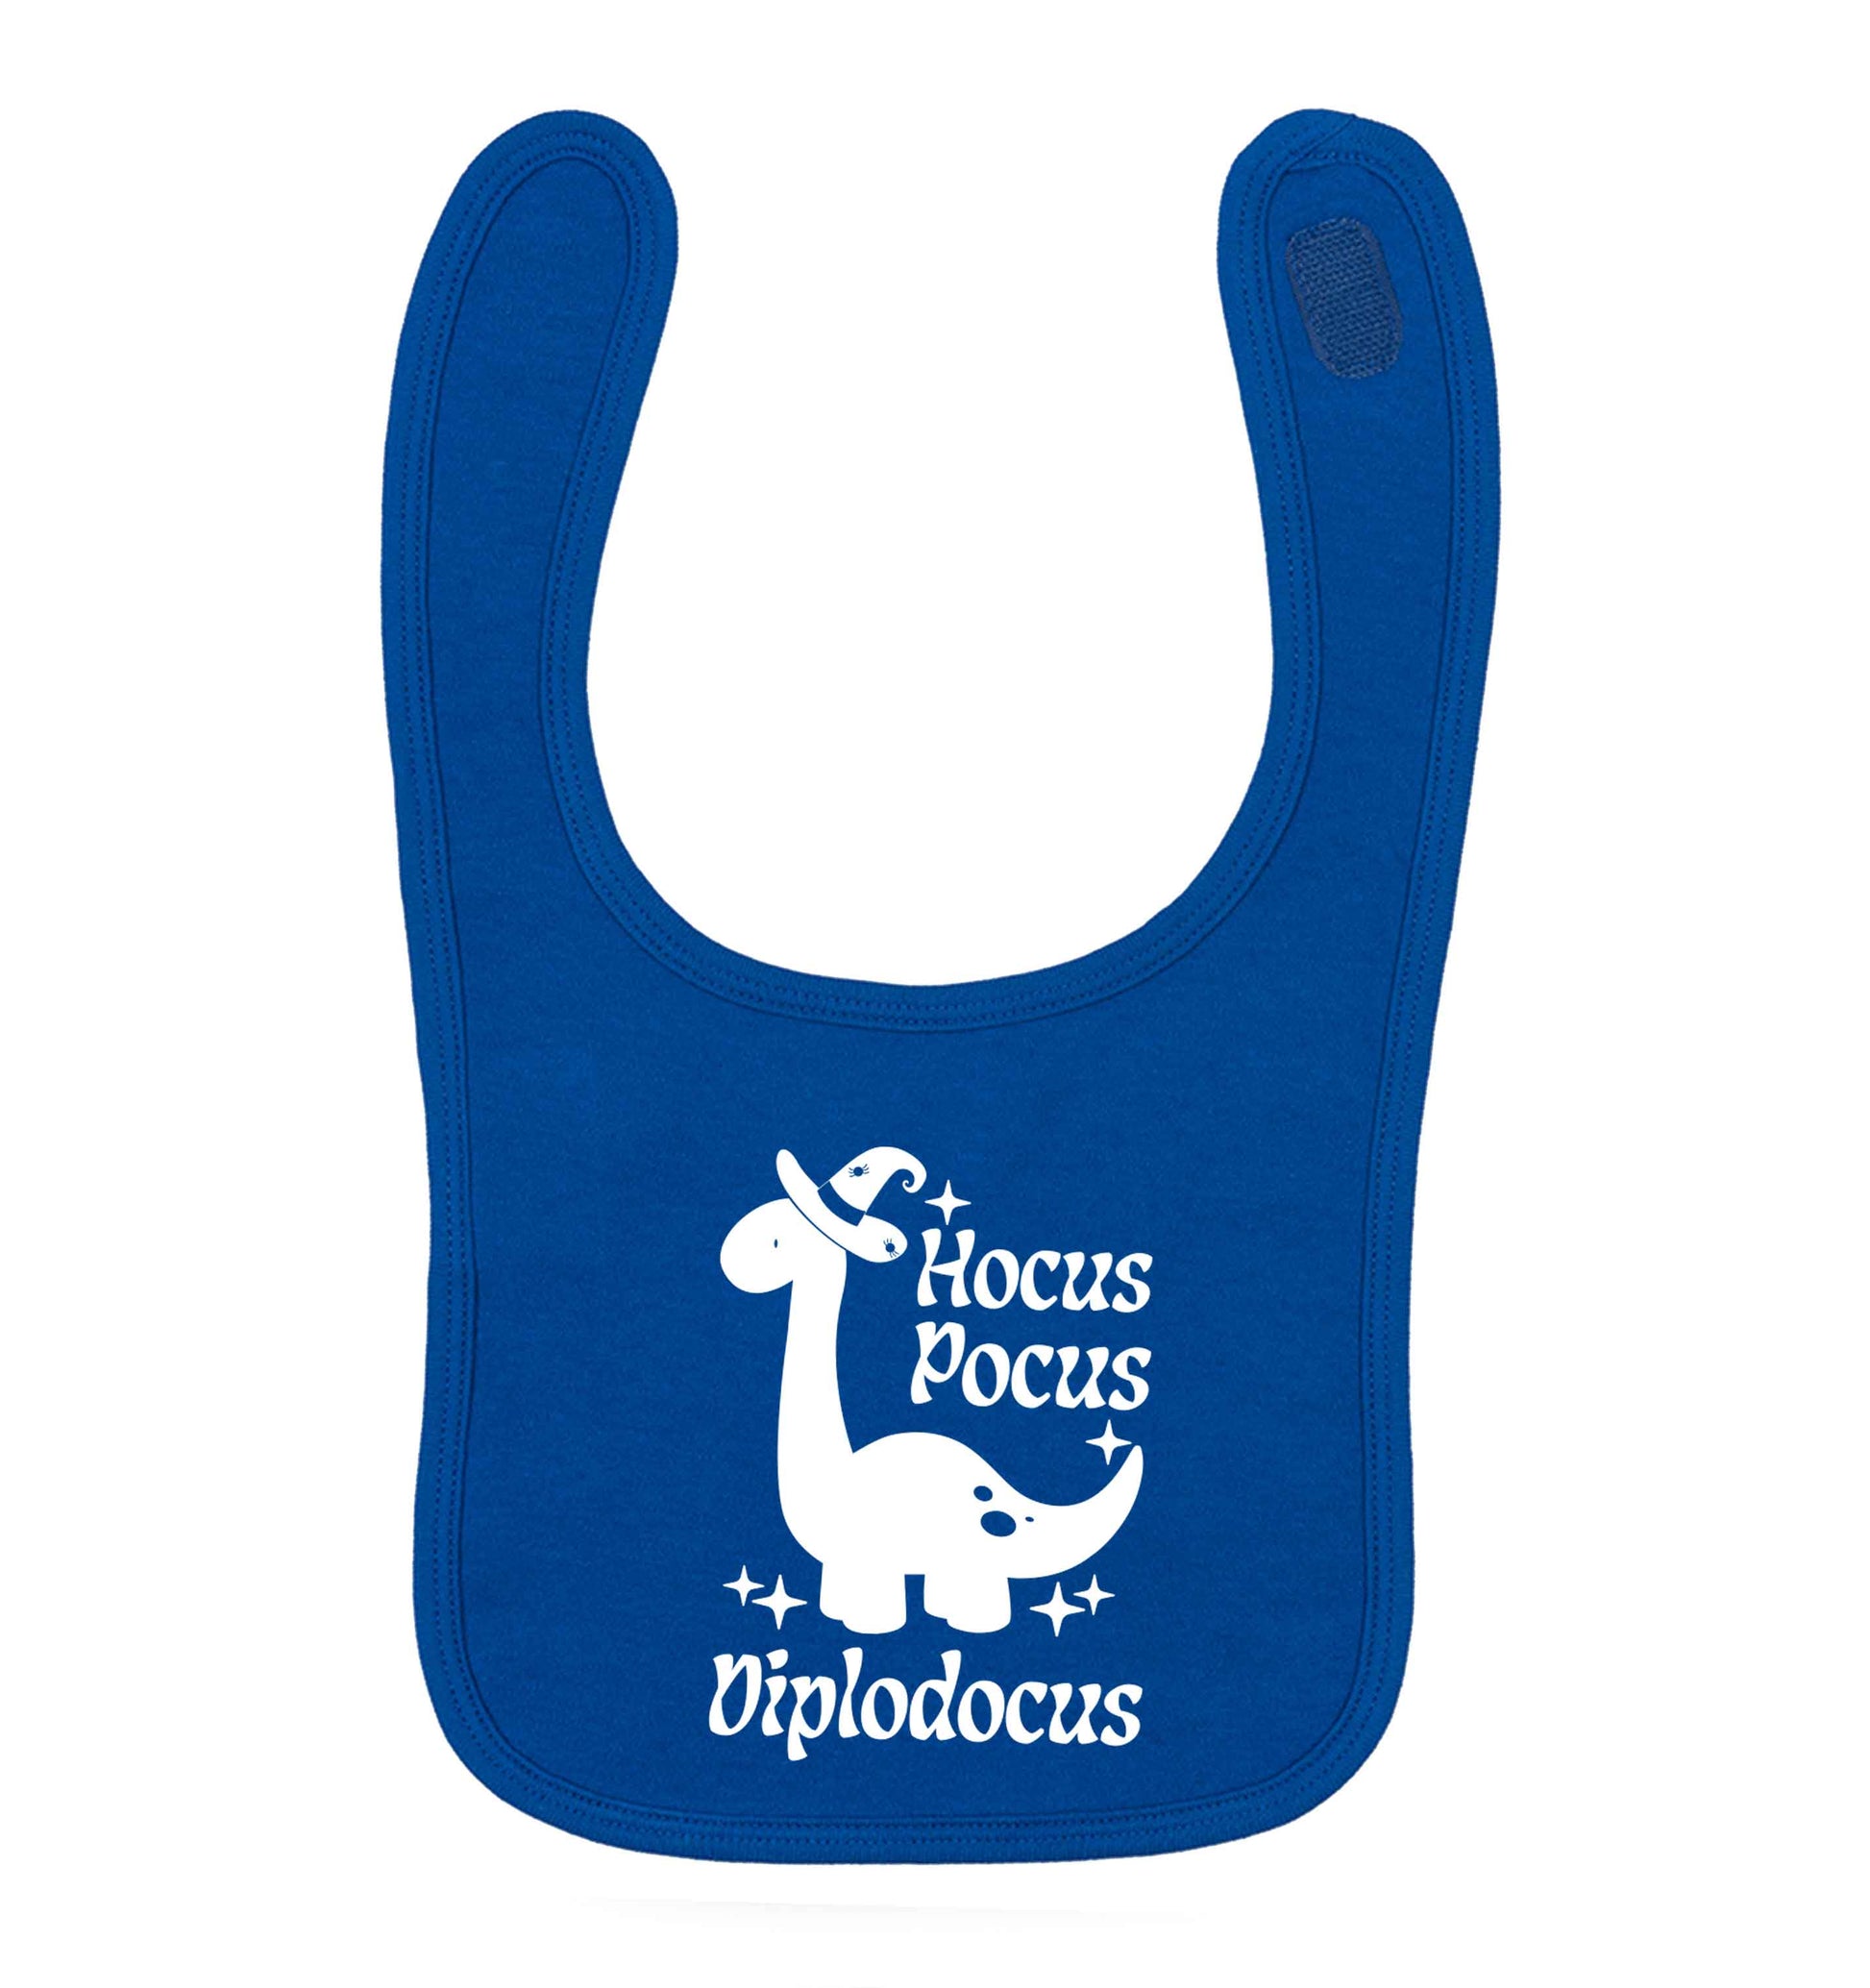 Hocus pocus diplodocus Kit royal blue baby bib